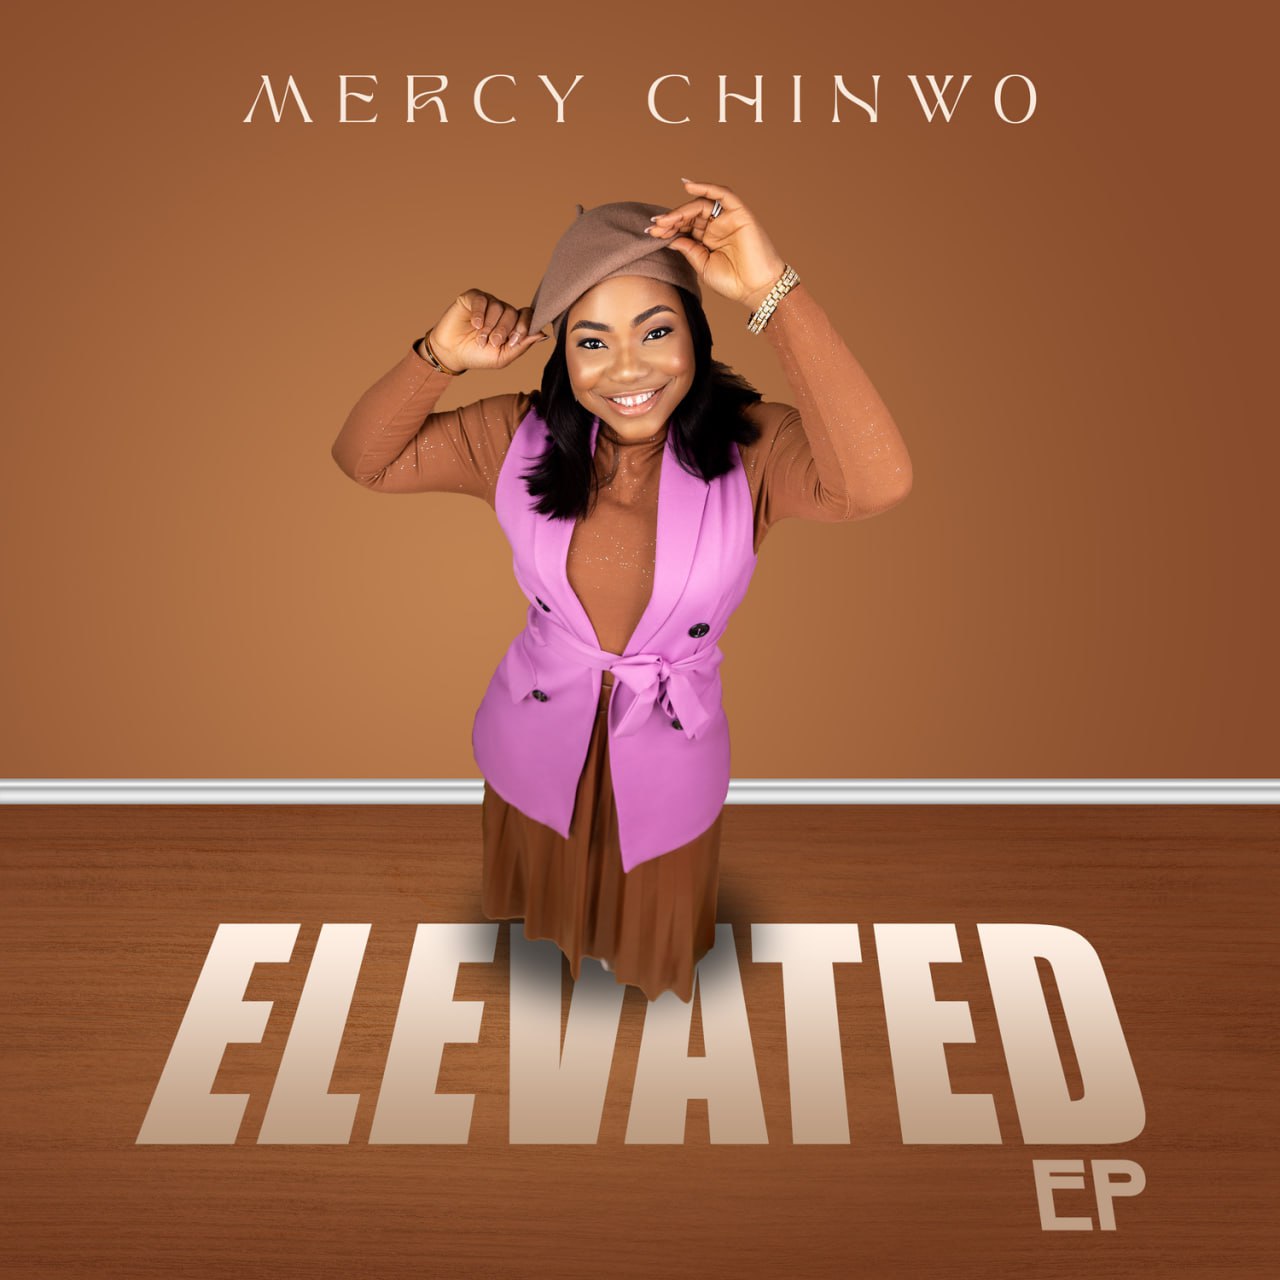 Hollow - Mercy Chinwo